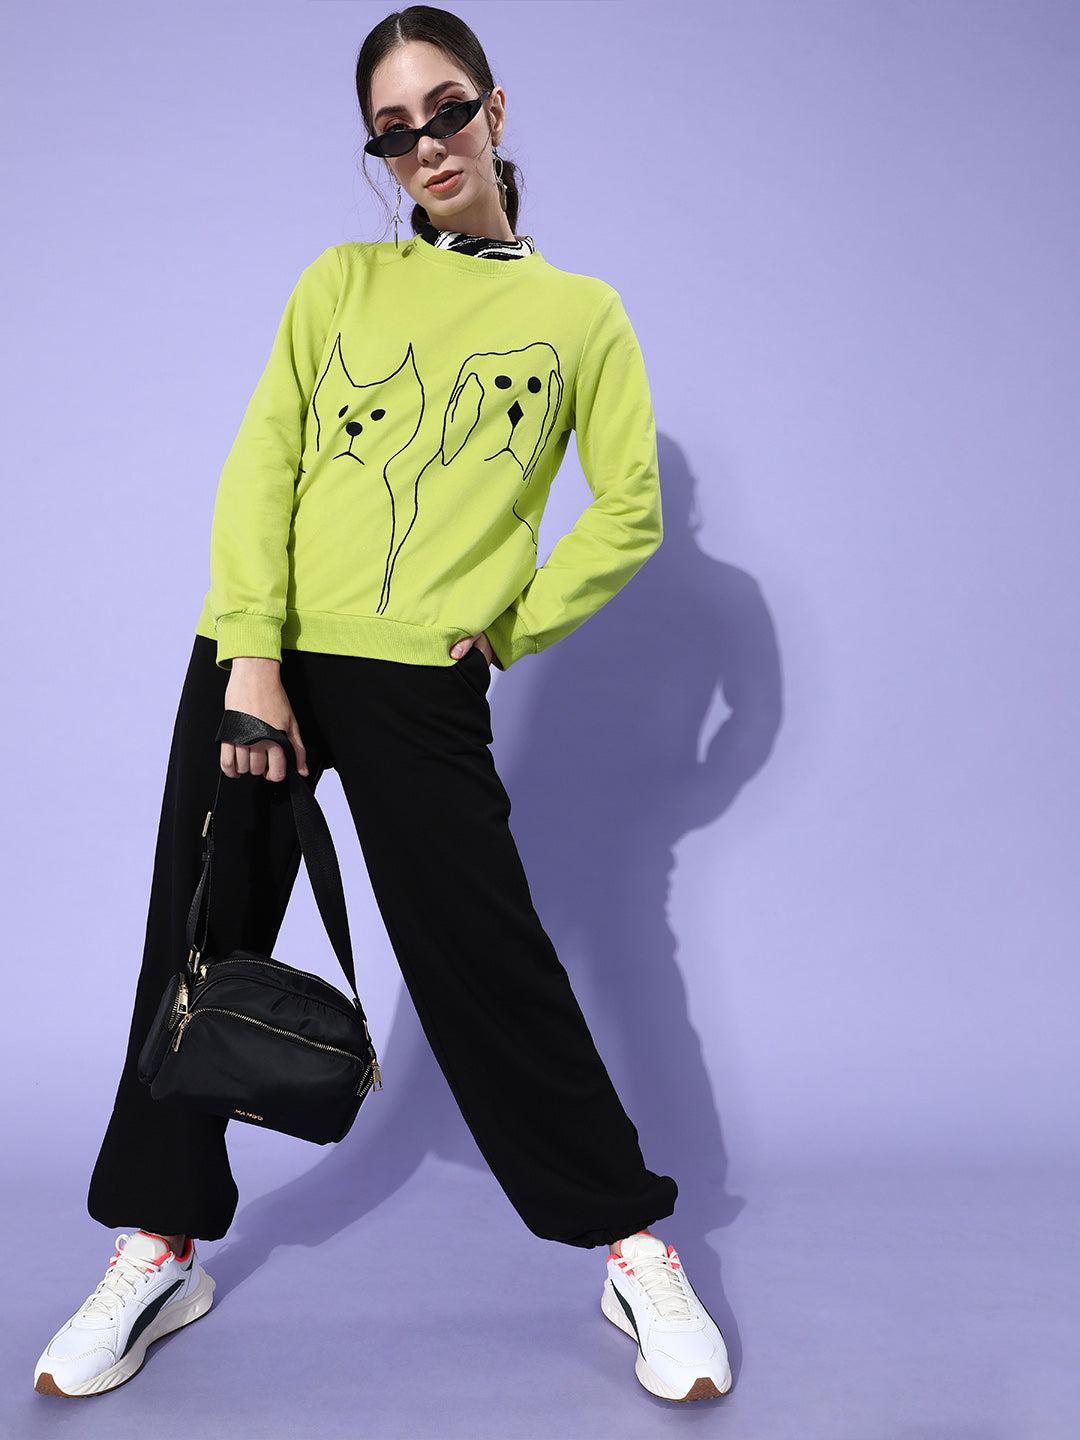 Athena Women Lime Green Graphic Quirky Outerwear Sweatshirt - Athena Lifestyle